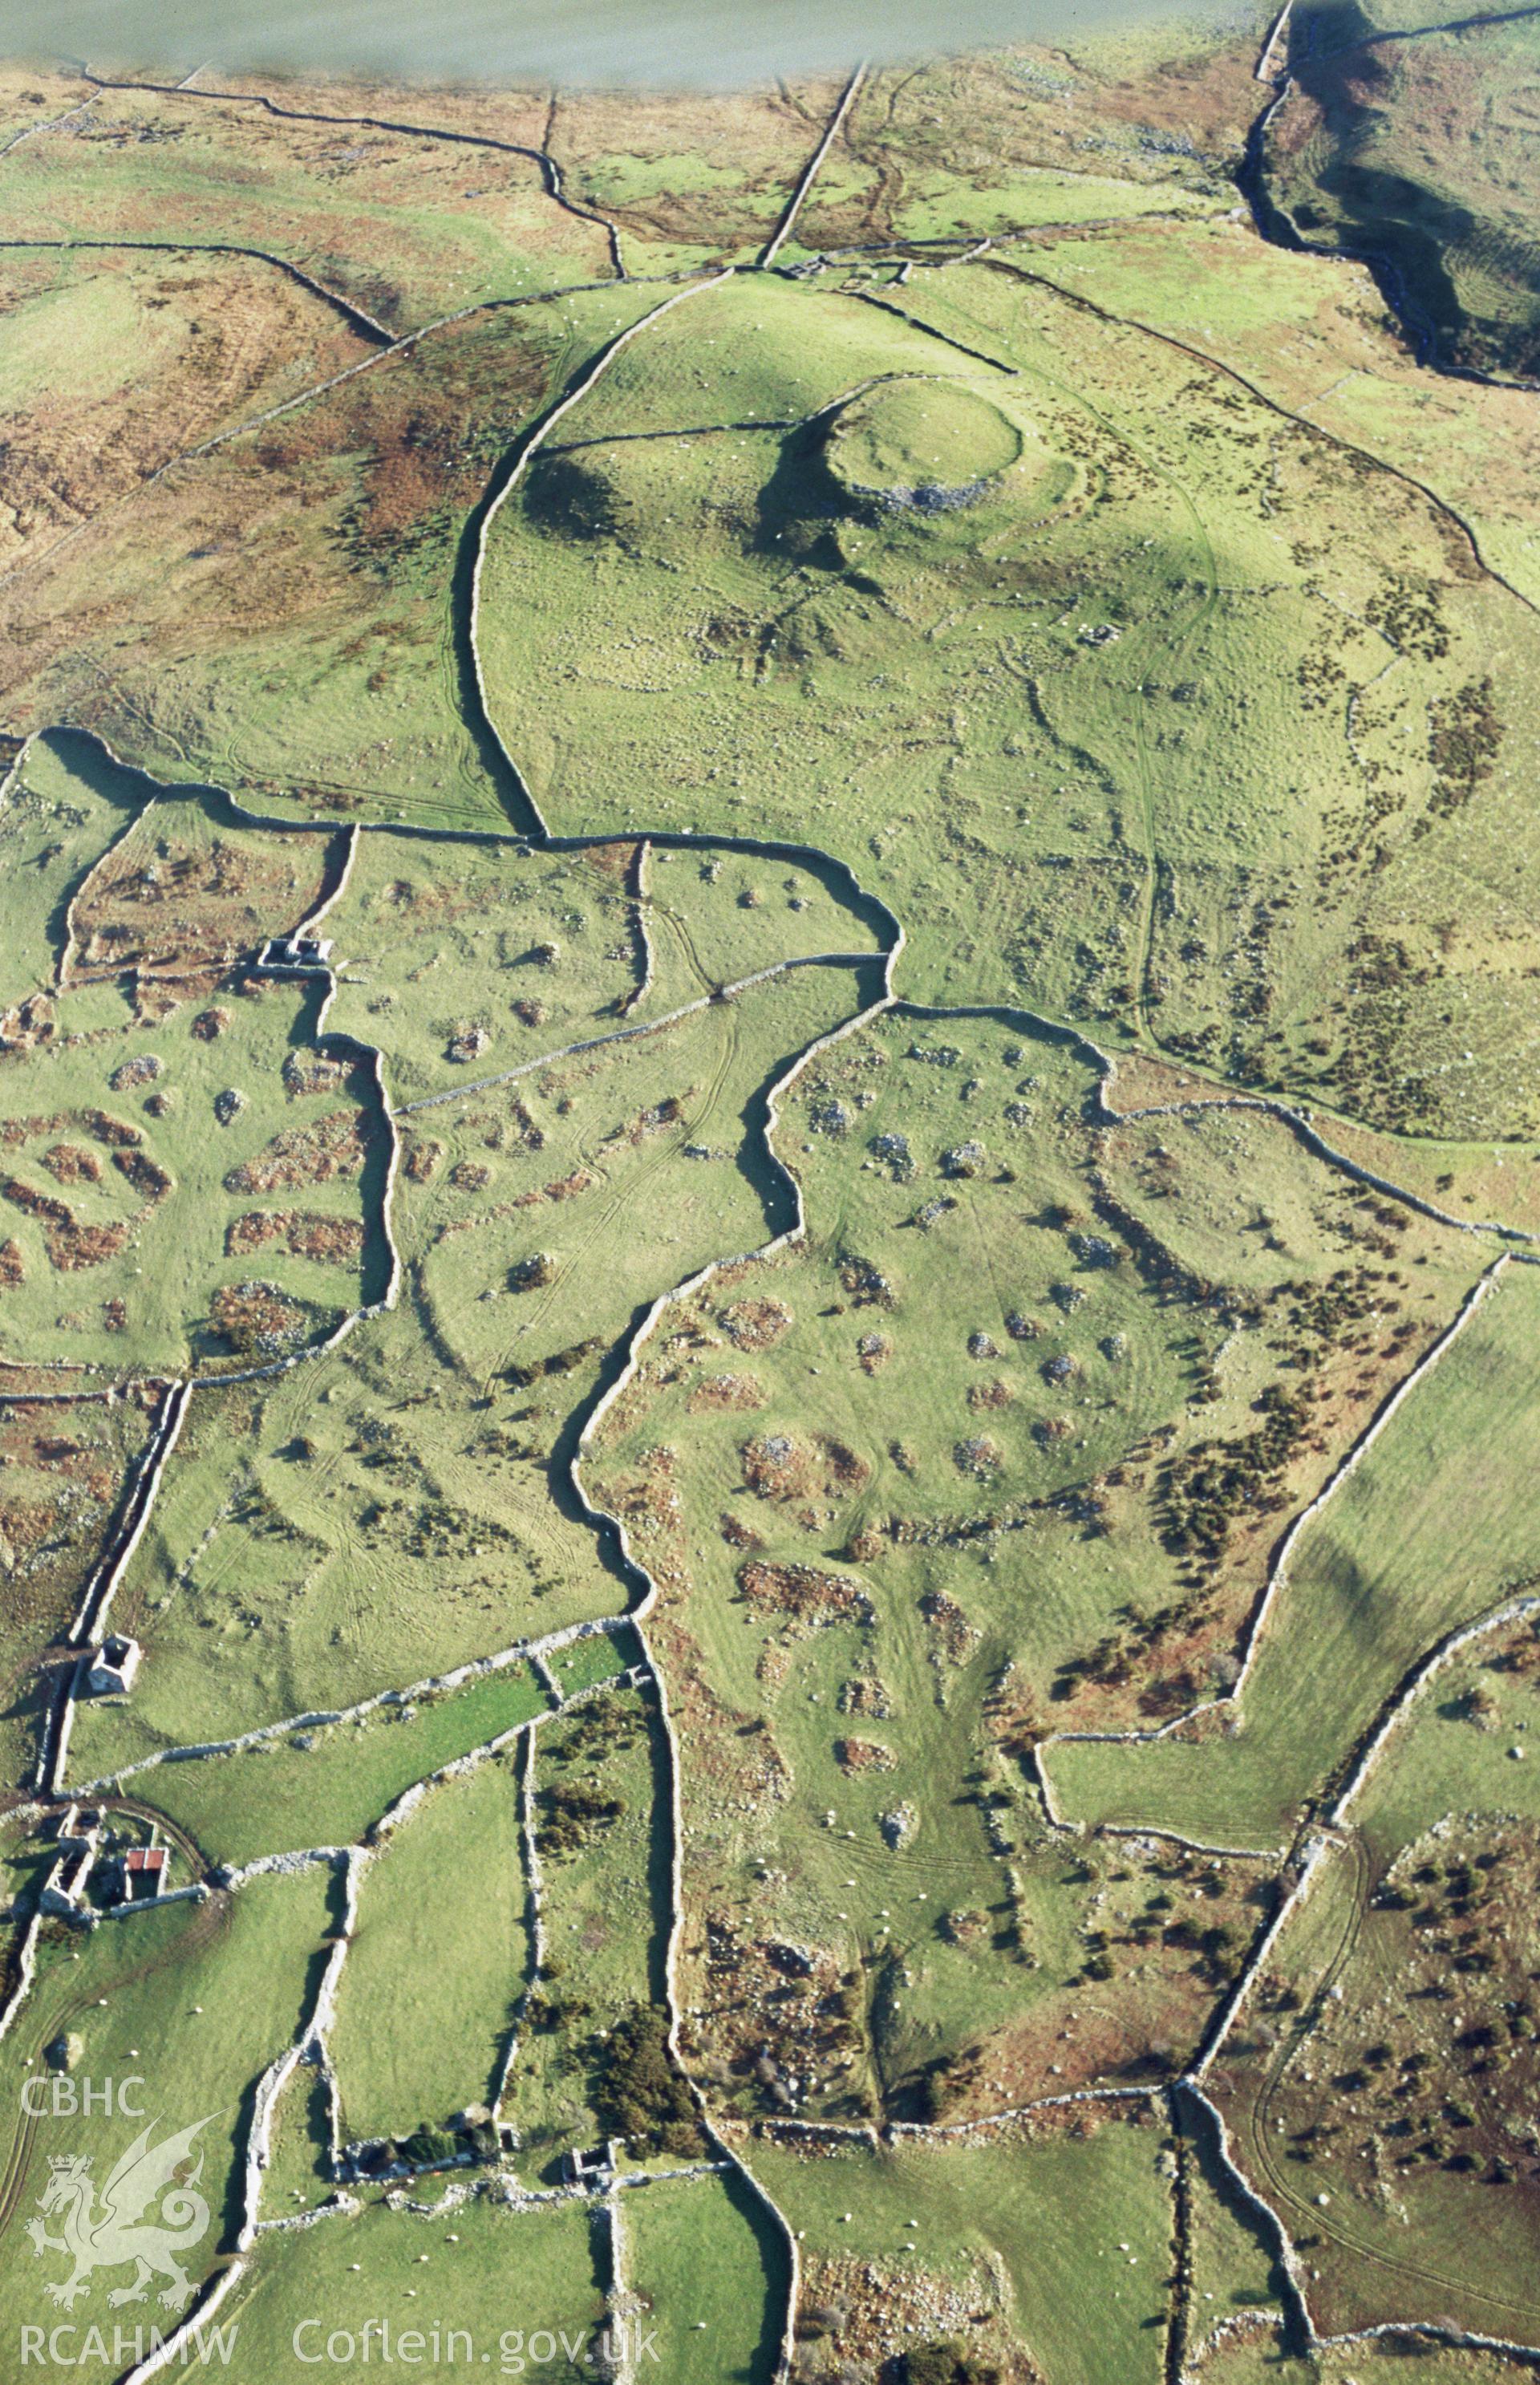 Slide of RCAHMW colour oblique aerial photograph of Pen y Dinas, Dyffryn Ardudwy, taken by T.G. Driver, 2005.